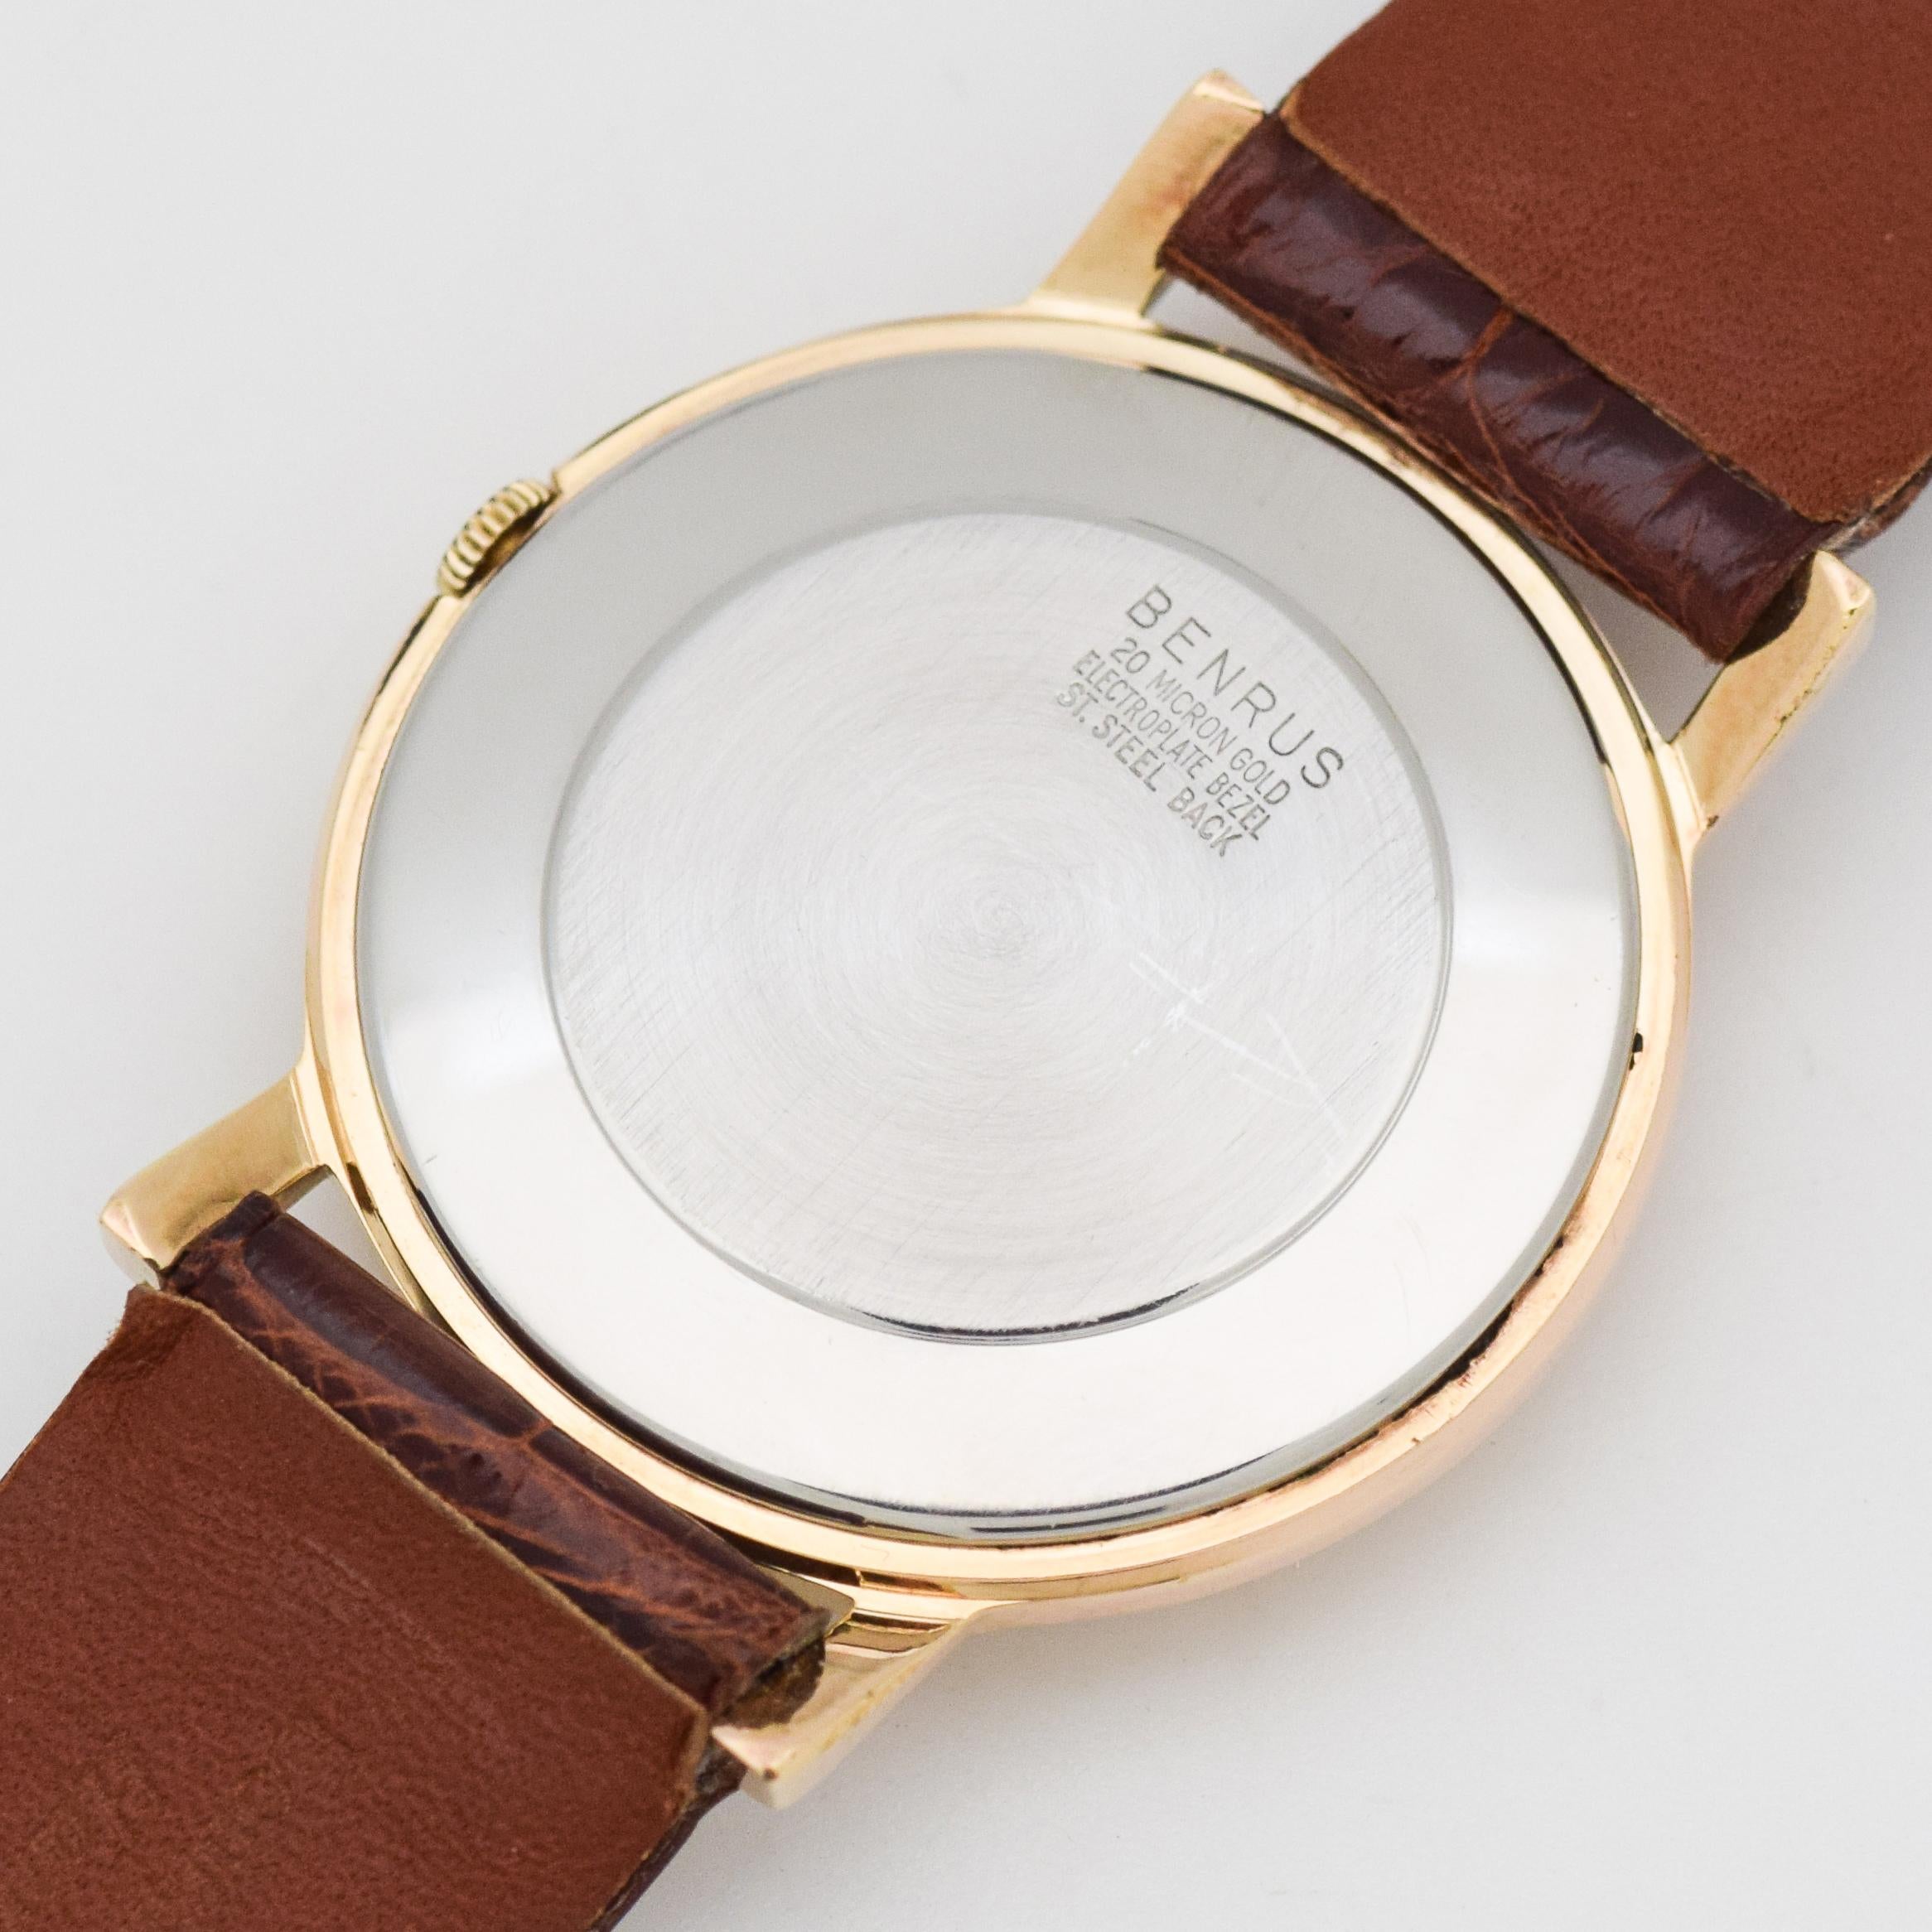 benrus 20 micron gold watch